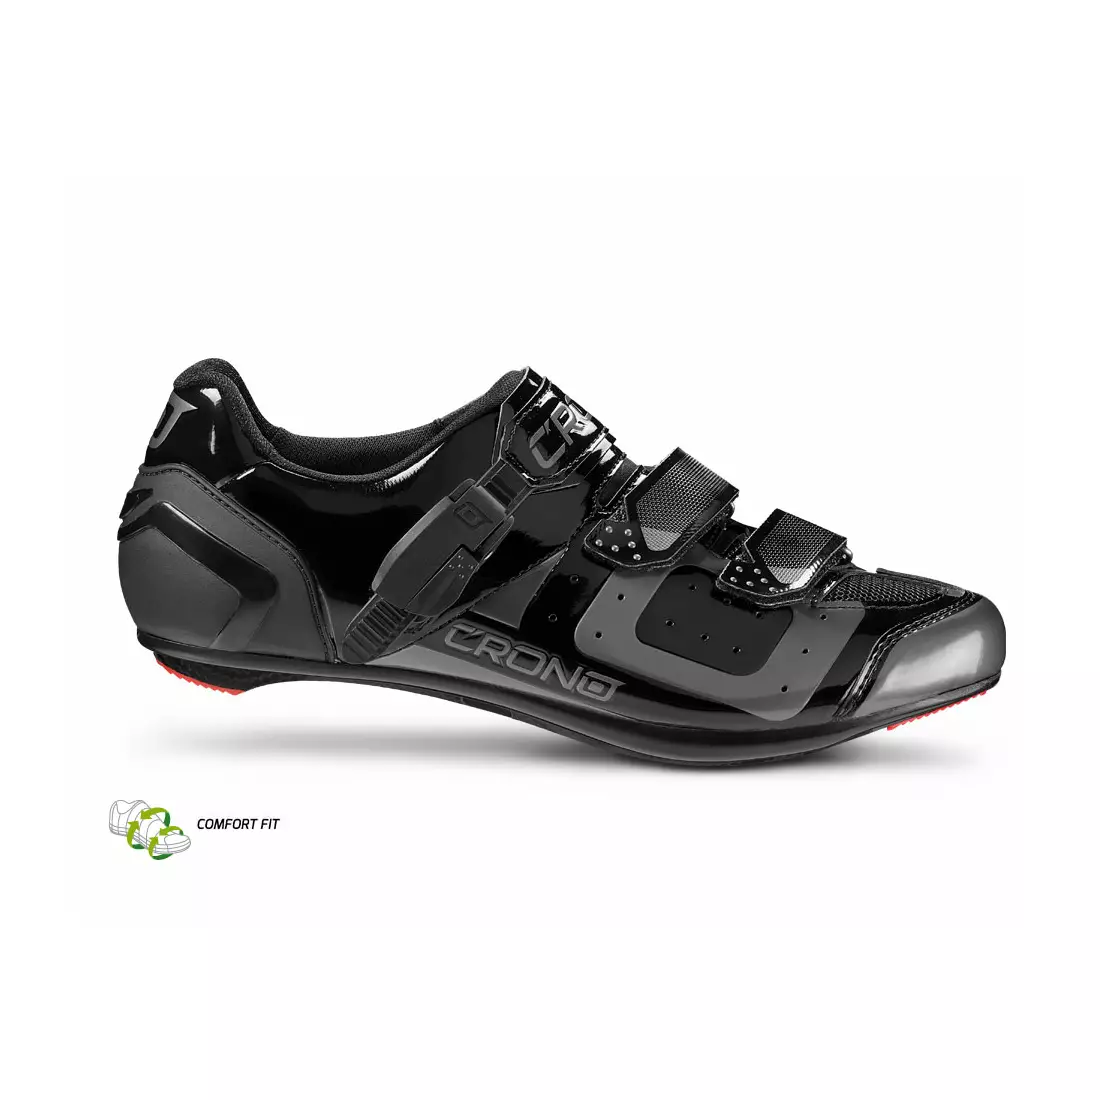 CRONO CR3 nylon - road cycling shoes, black